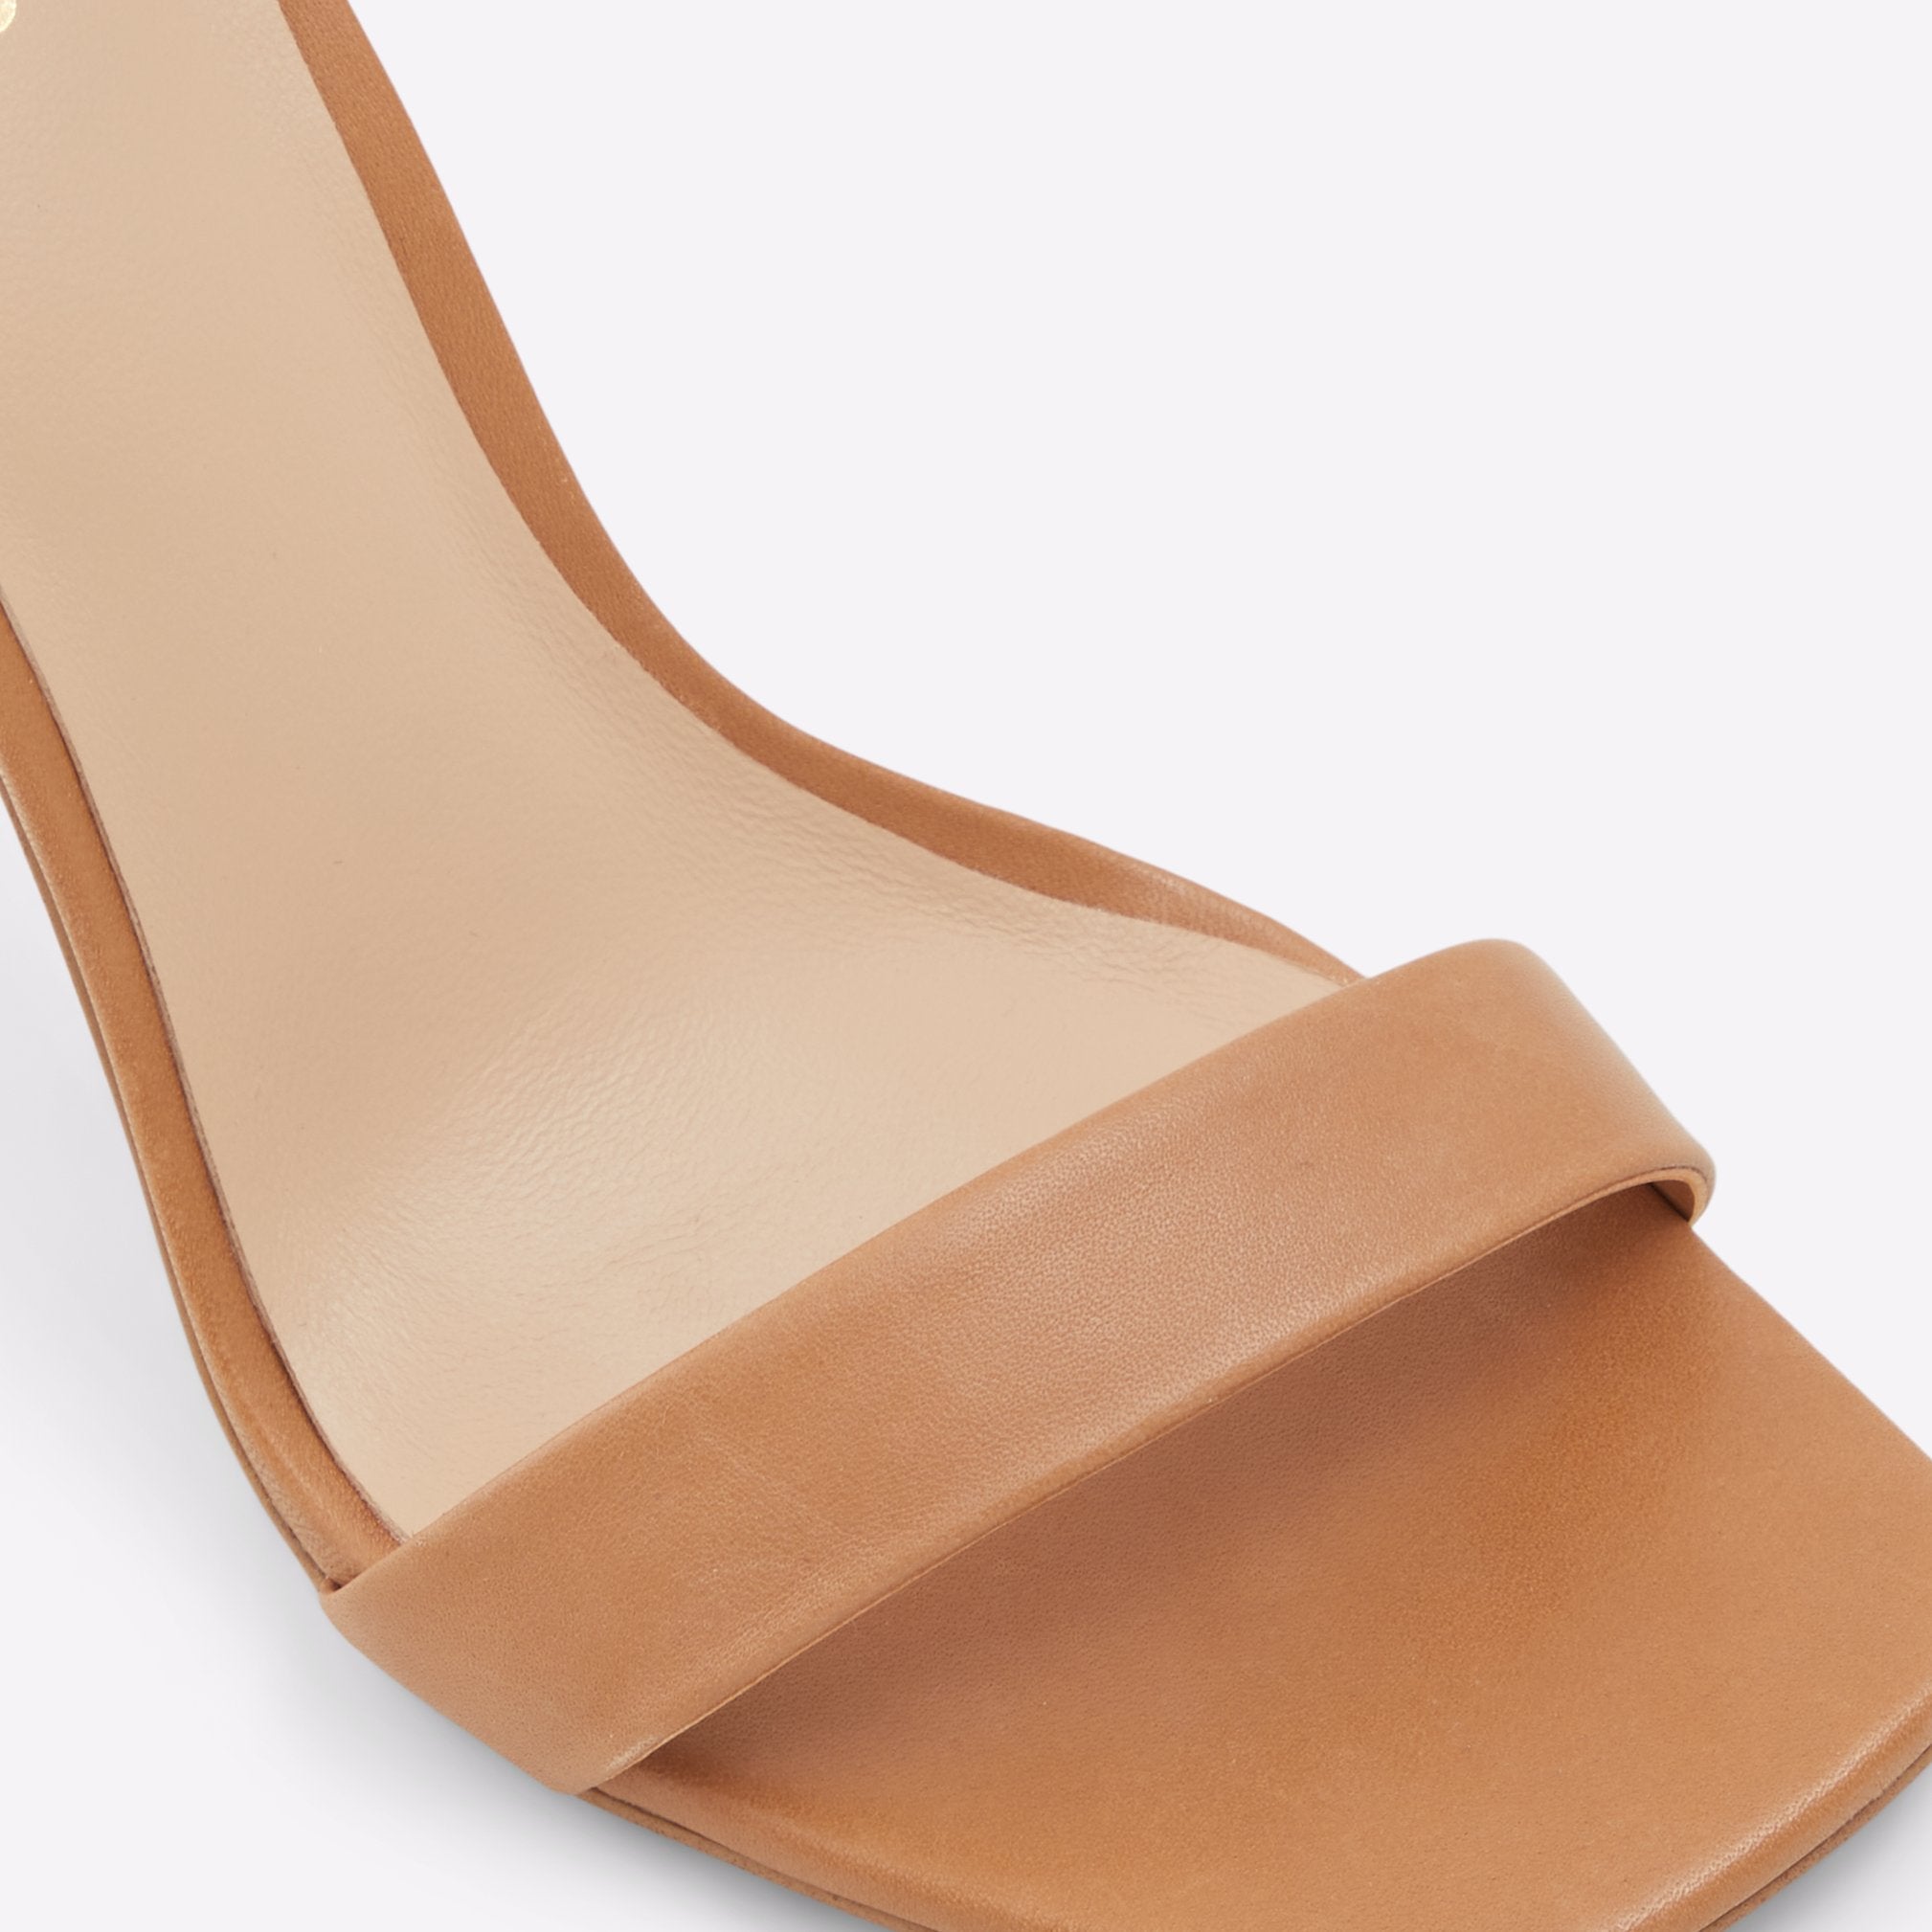 Afendaven Women Shoes - Light Brown - ALDO KSA